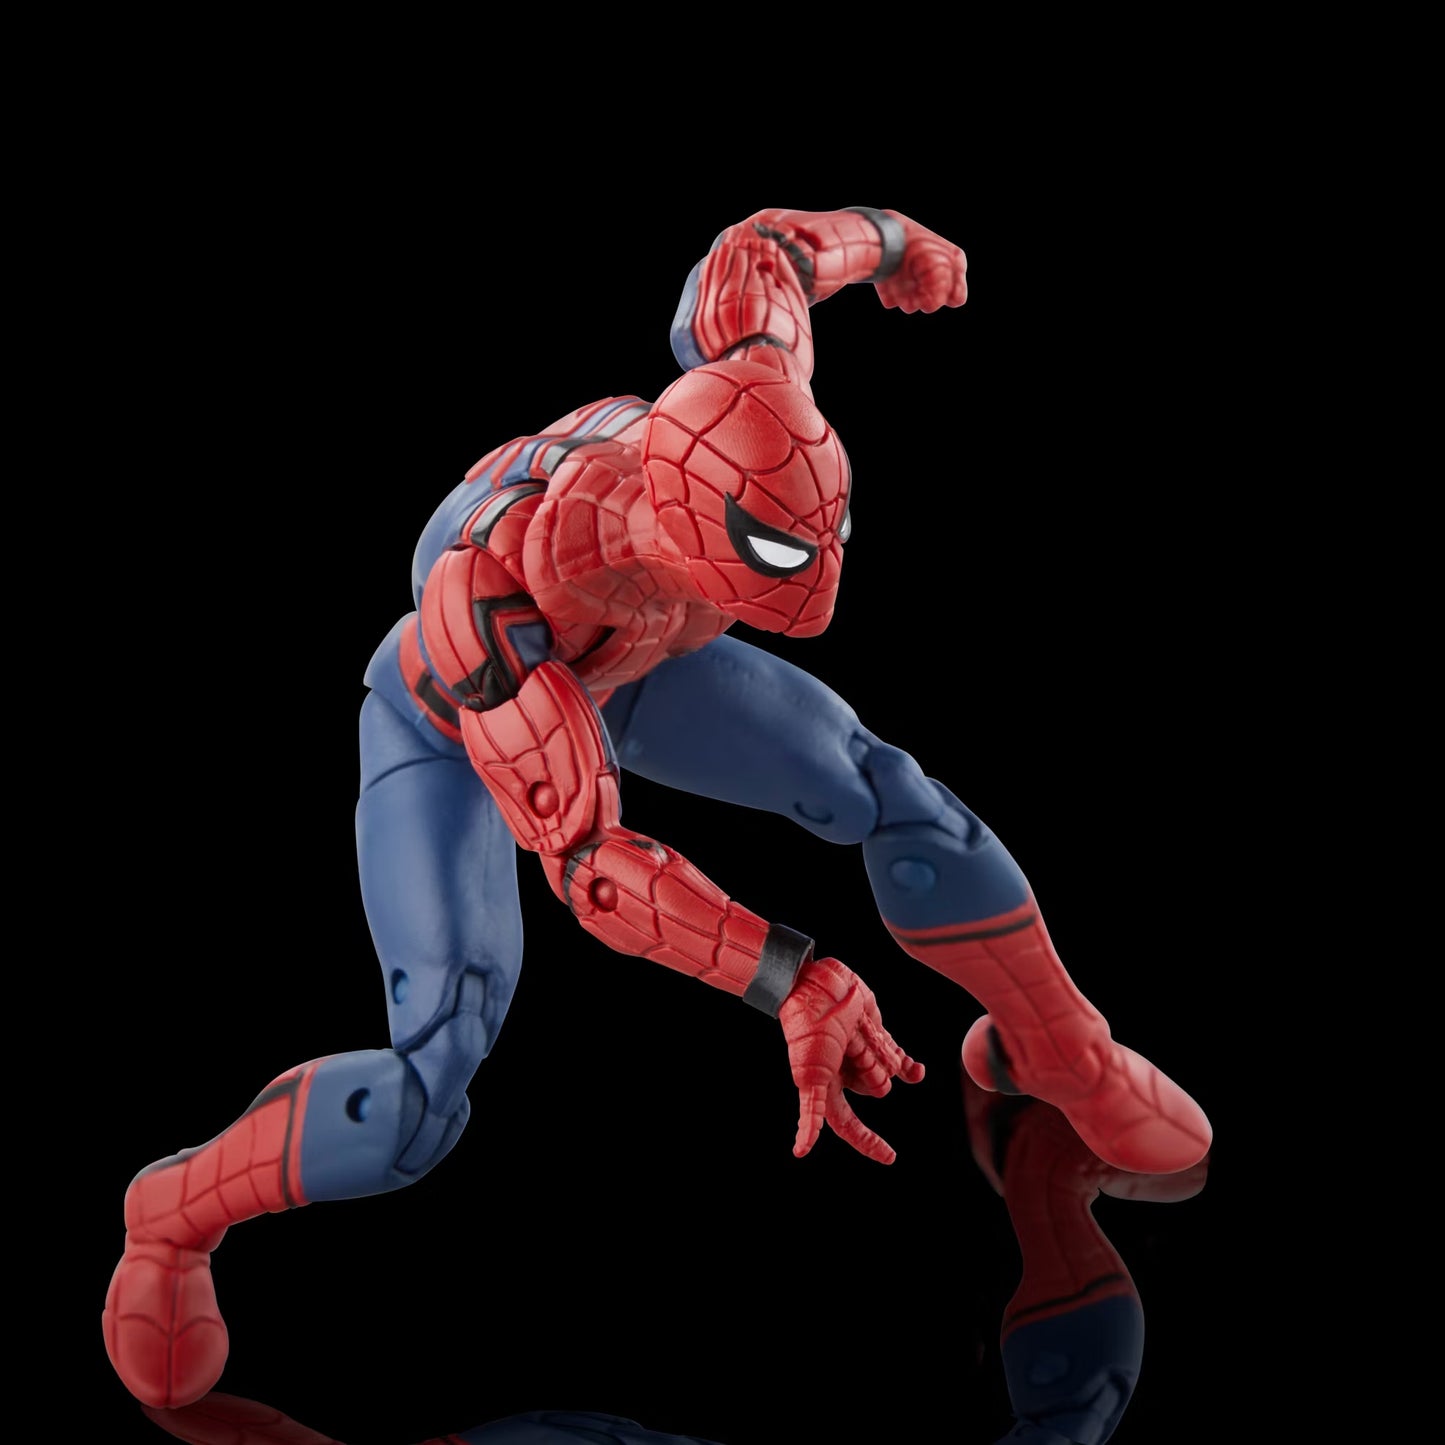 Marvel Legends Infinity Saga Spider-Man